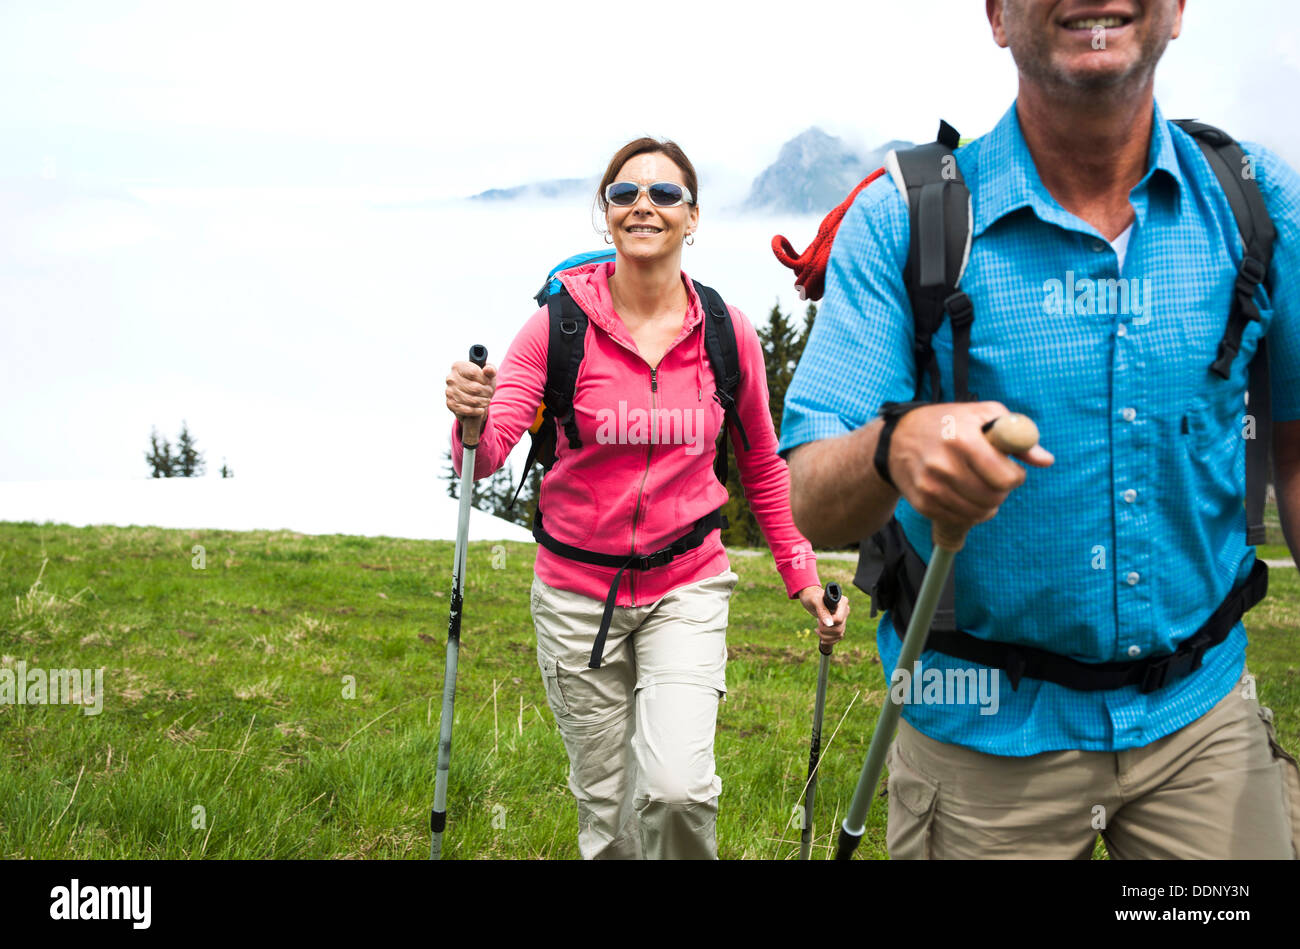 Couple hiking, Neunerkoepfle, Allgaeu Alps, Tannheim Valley, Tyrol, Austria, Europe Stock Photo